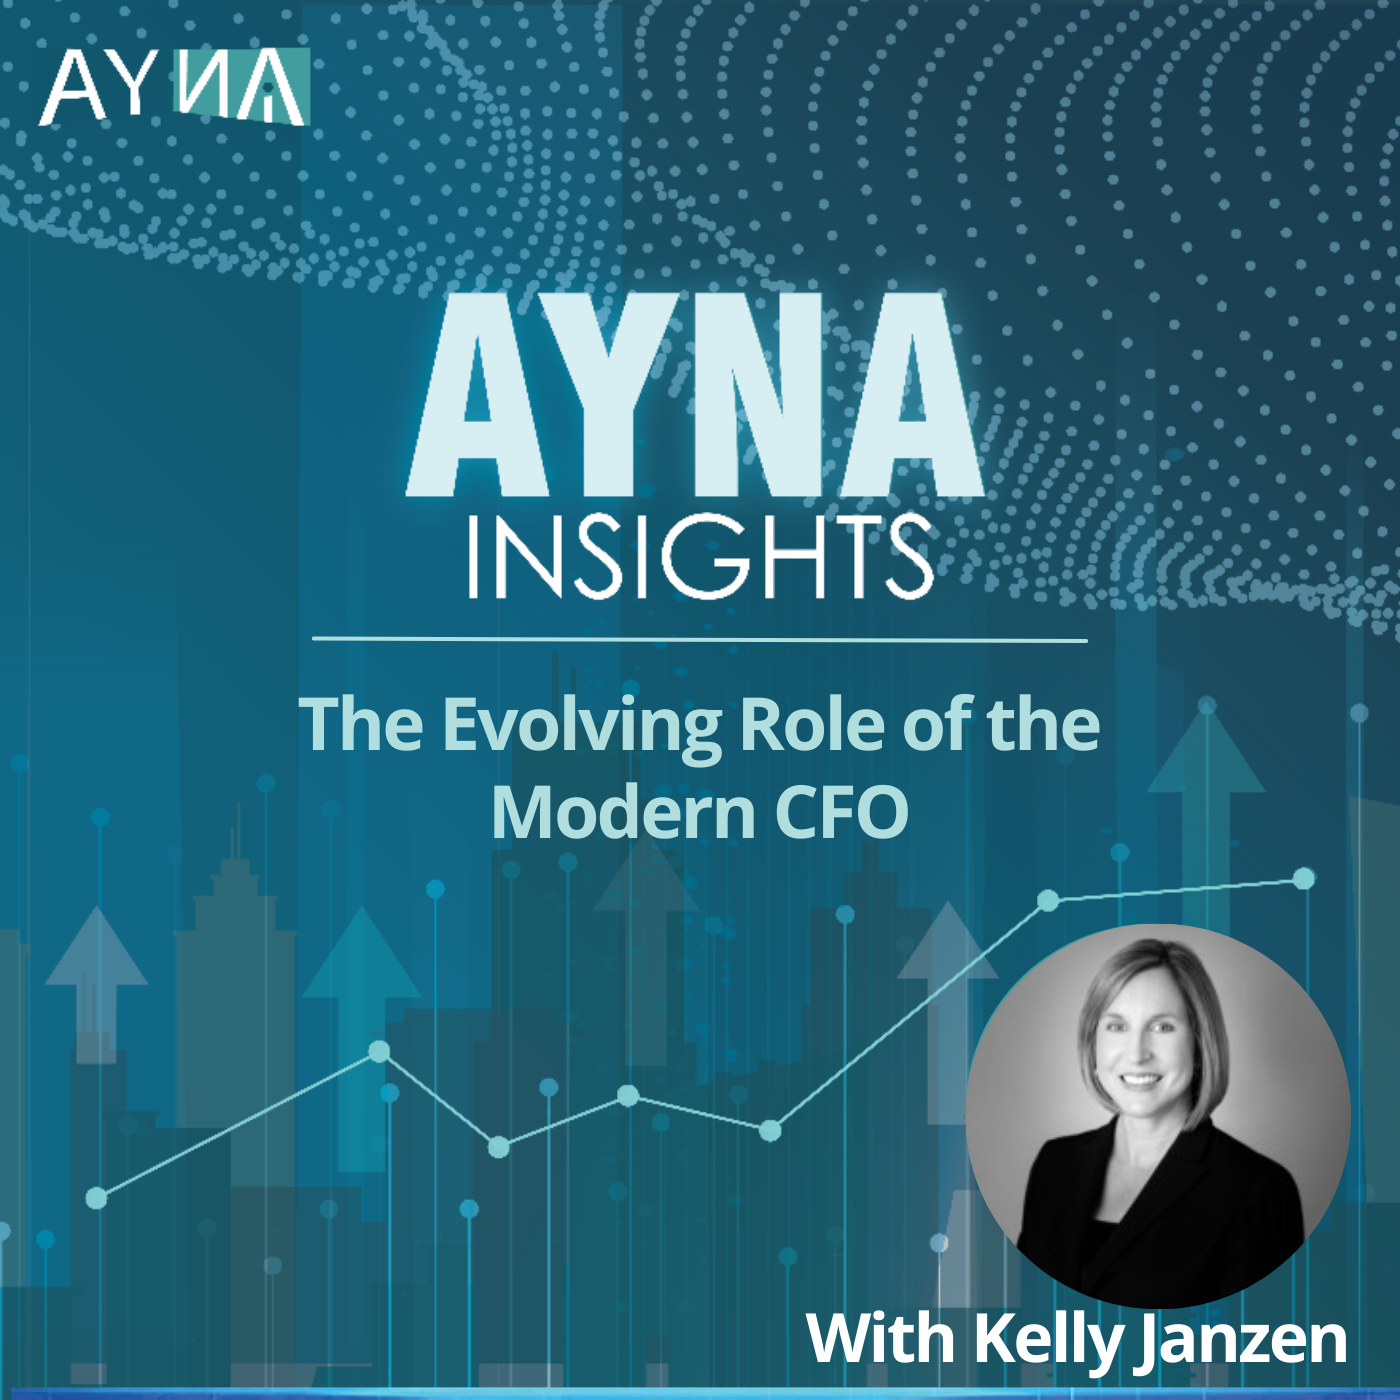 Kelly Janzen: The Evolving Role of the Modern CFO